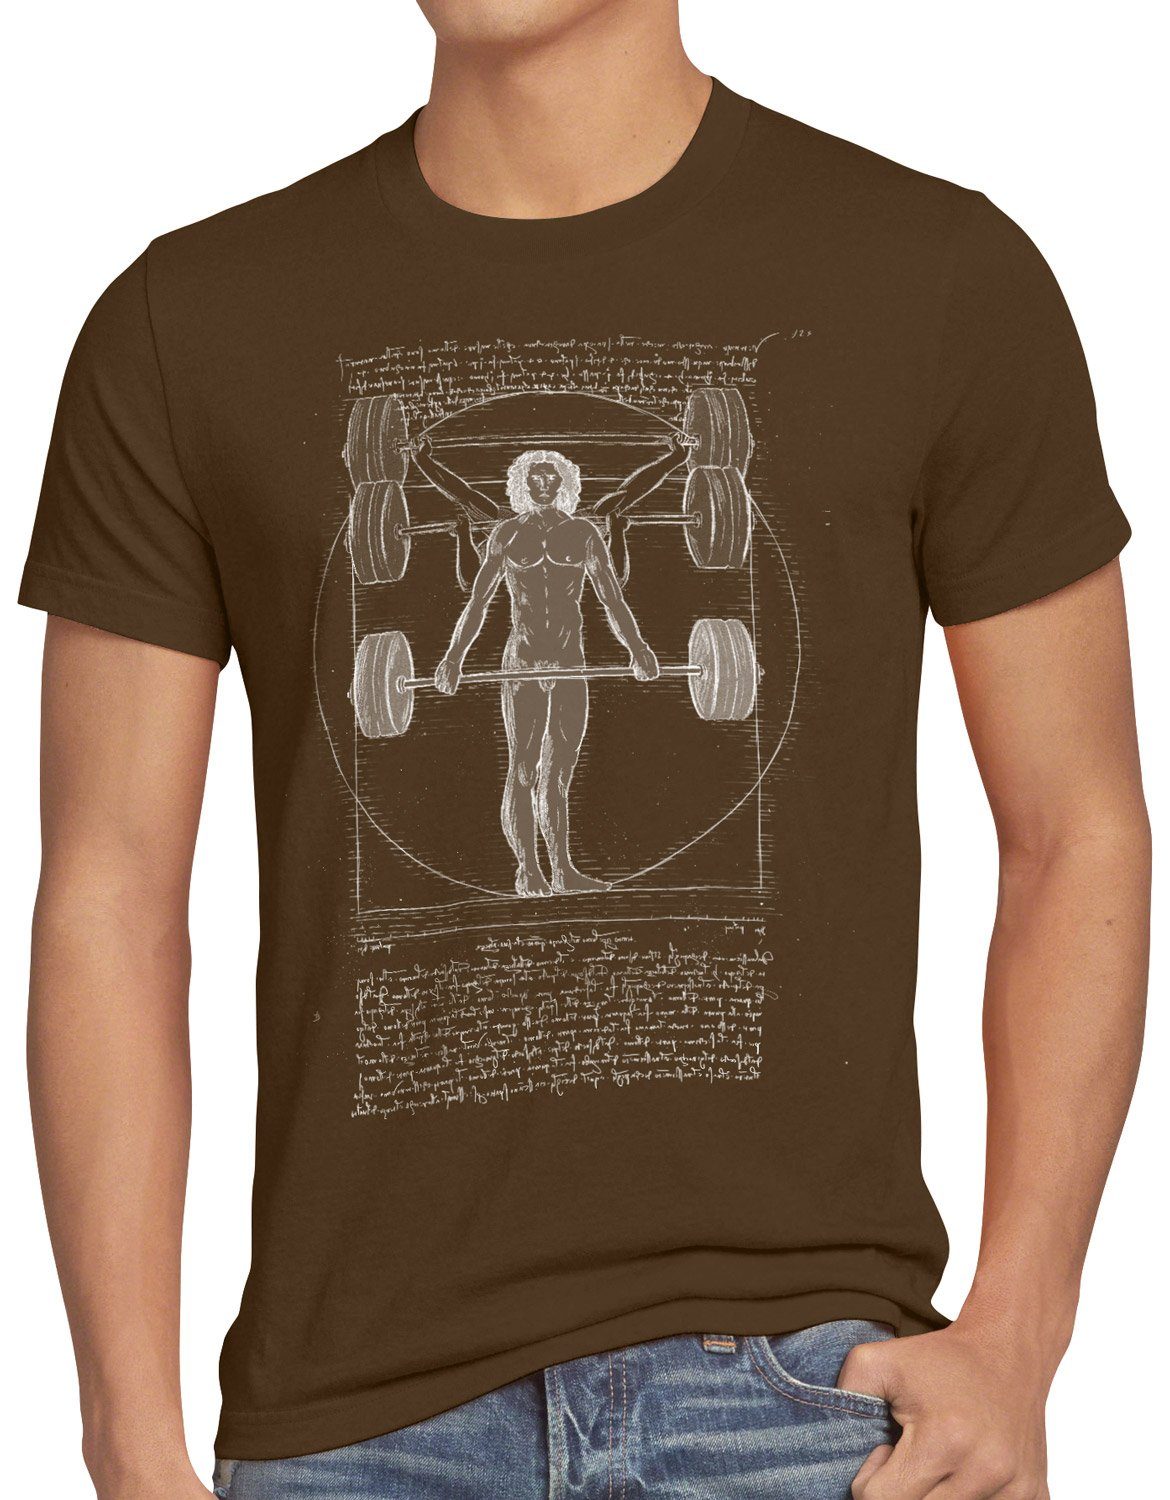 mit braun Print-Shirt Mensch Herren T-Shirt kreuzheben Langhantel Vitruvianischer style3 fitnesstudio